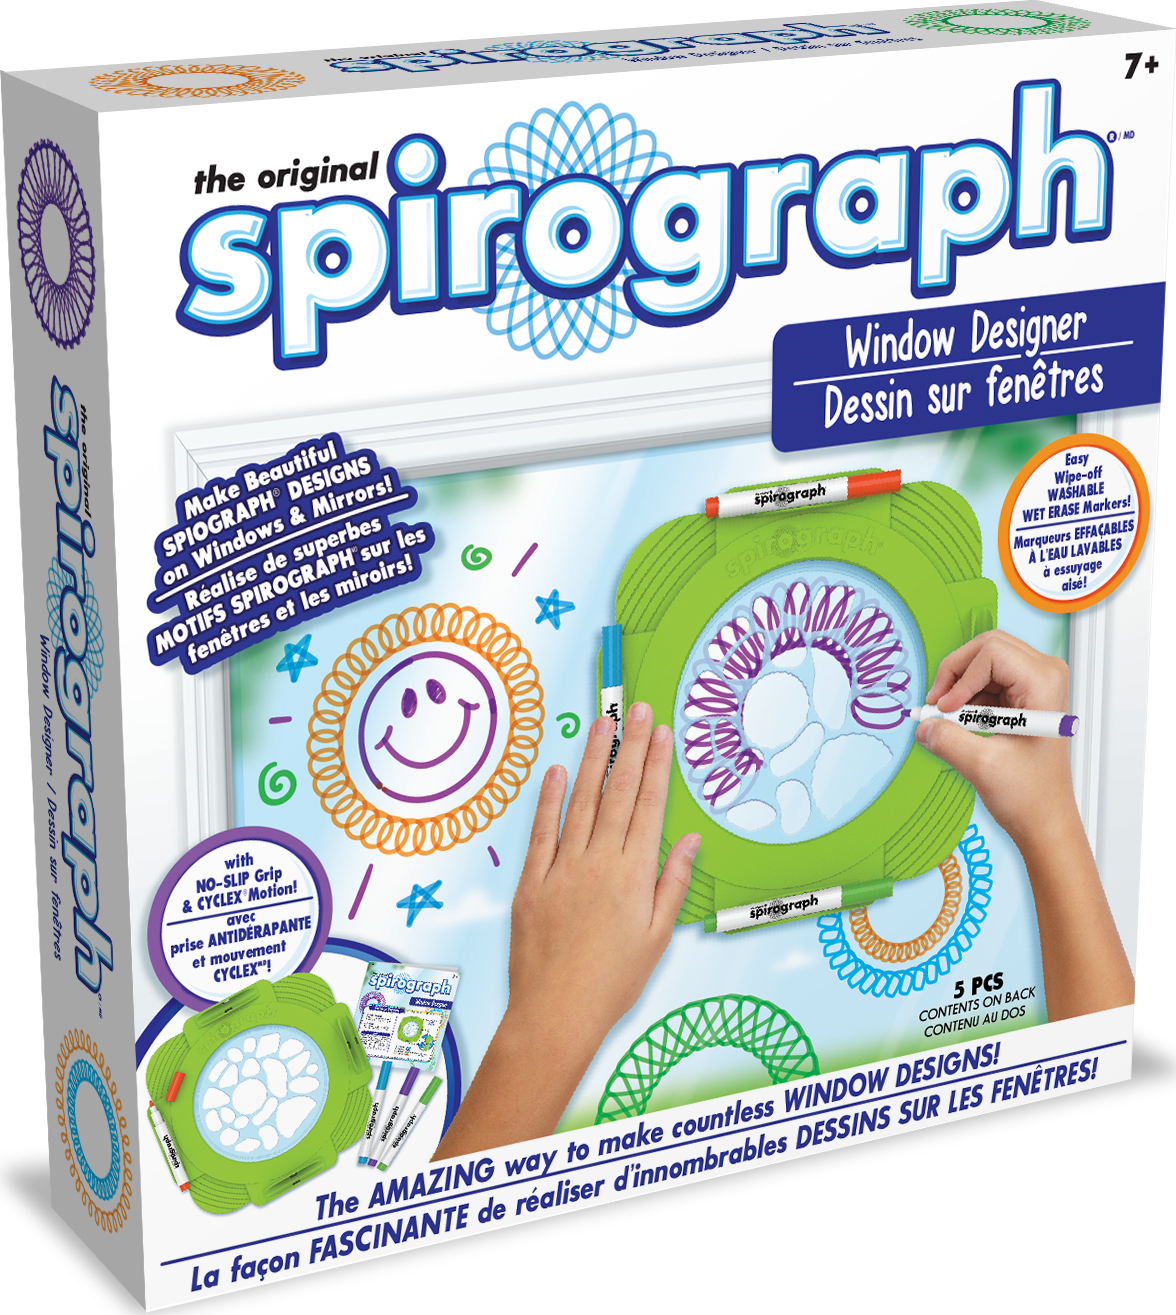 Spirograph - The Original Spirograph Junior Set 